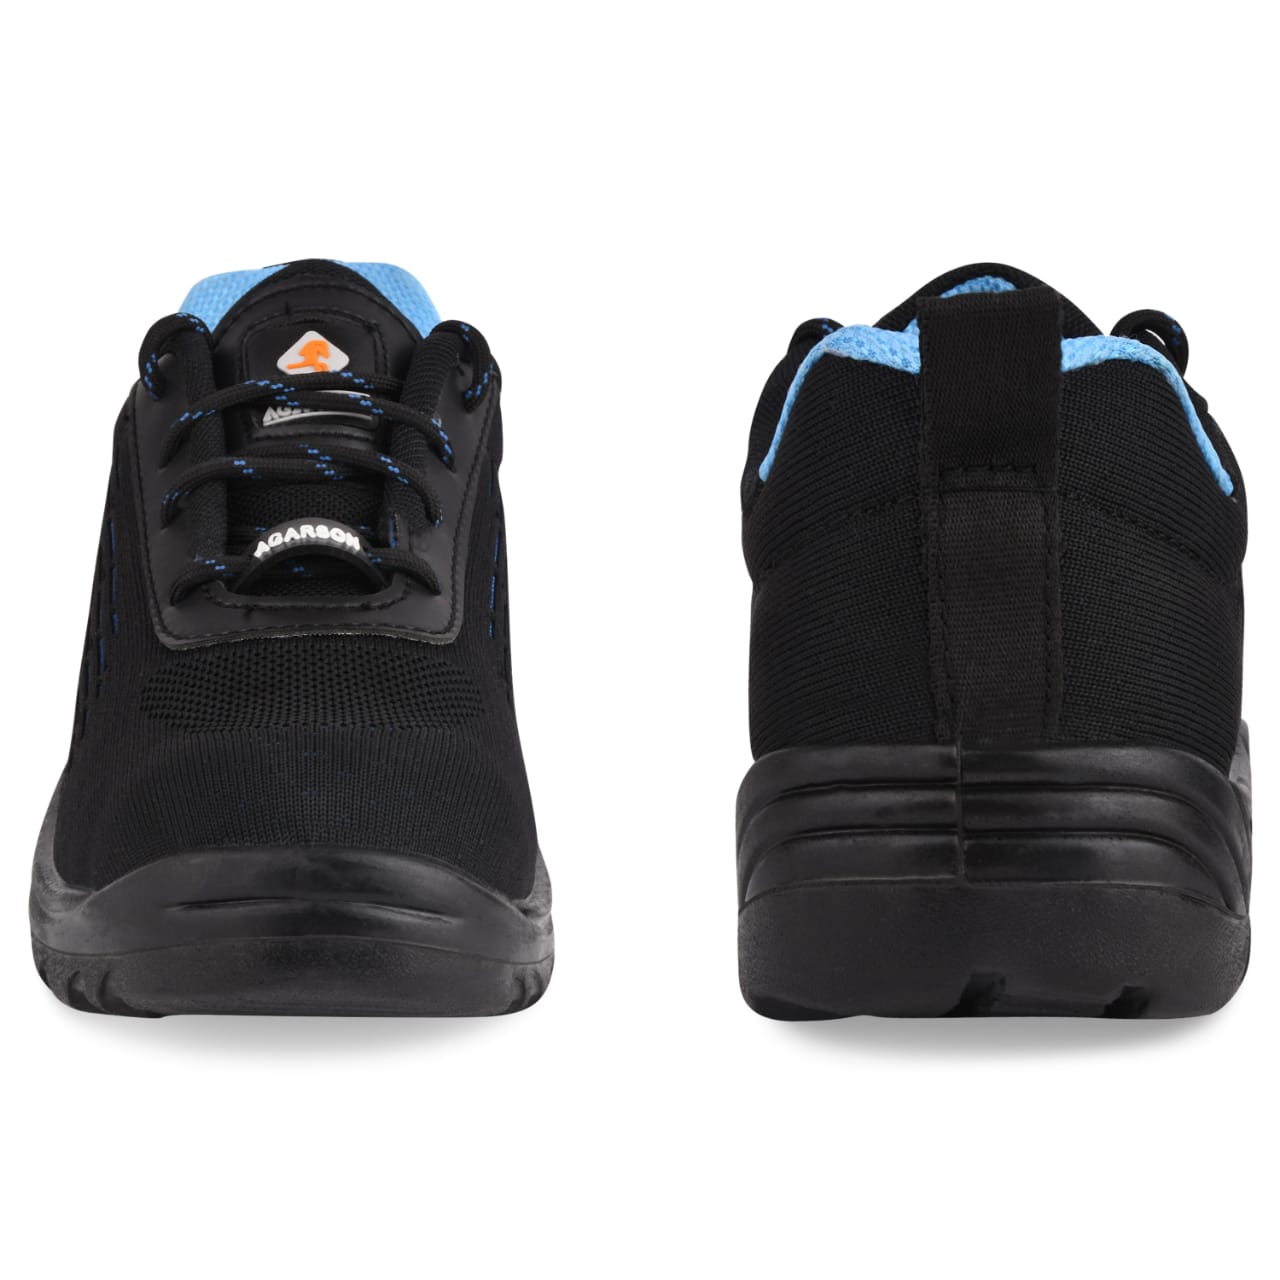 Michael Kors - Nikko Leather Wedge Sneakers Black 41 | www.luxurybags.eu